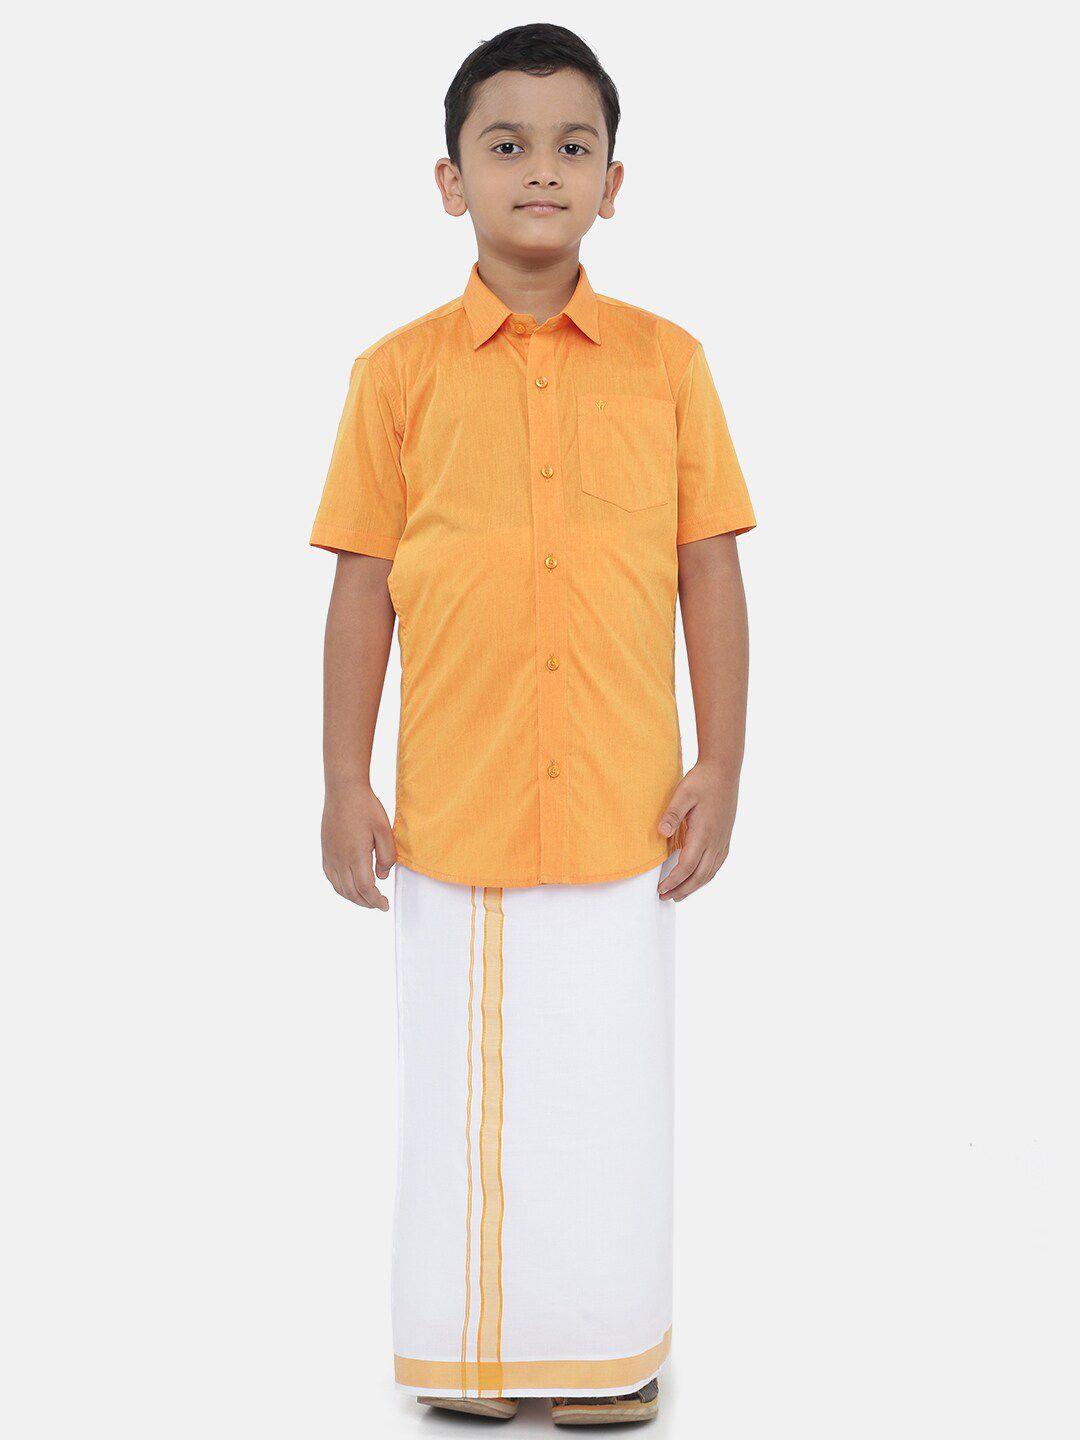 littlestars boys orange & white pure cotton shirt with dhoti